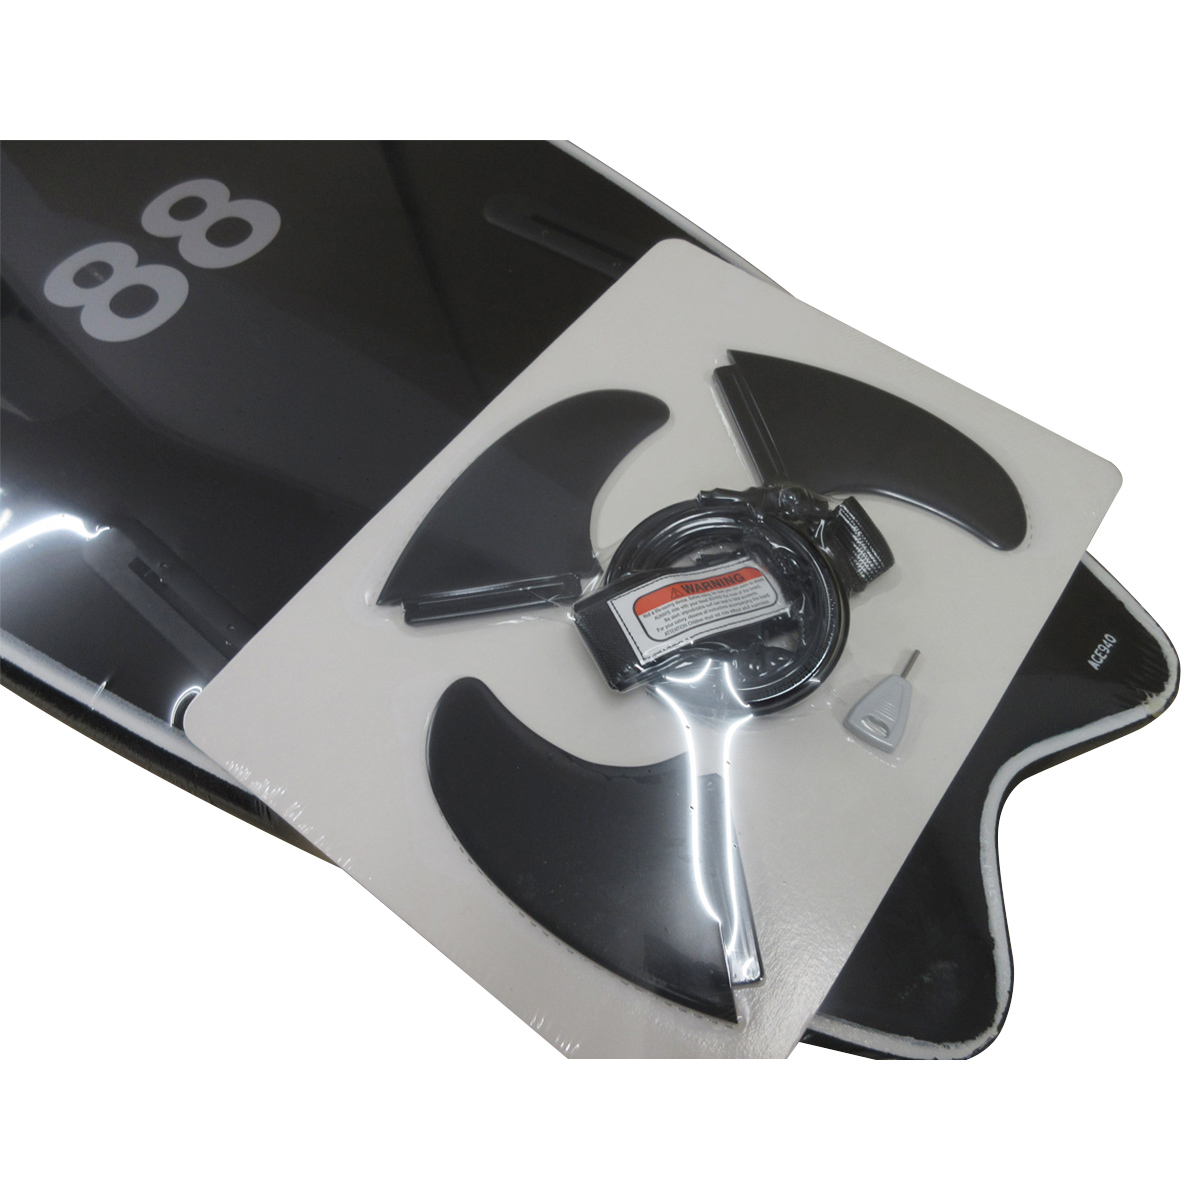 88 SURFBOARDS / THRUSTER 6`6 BLACK x BLACK